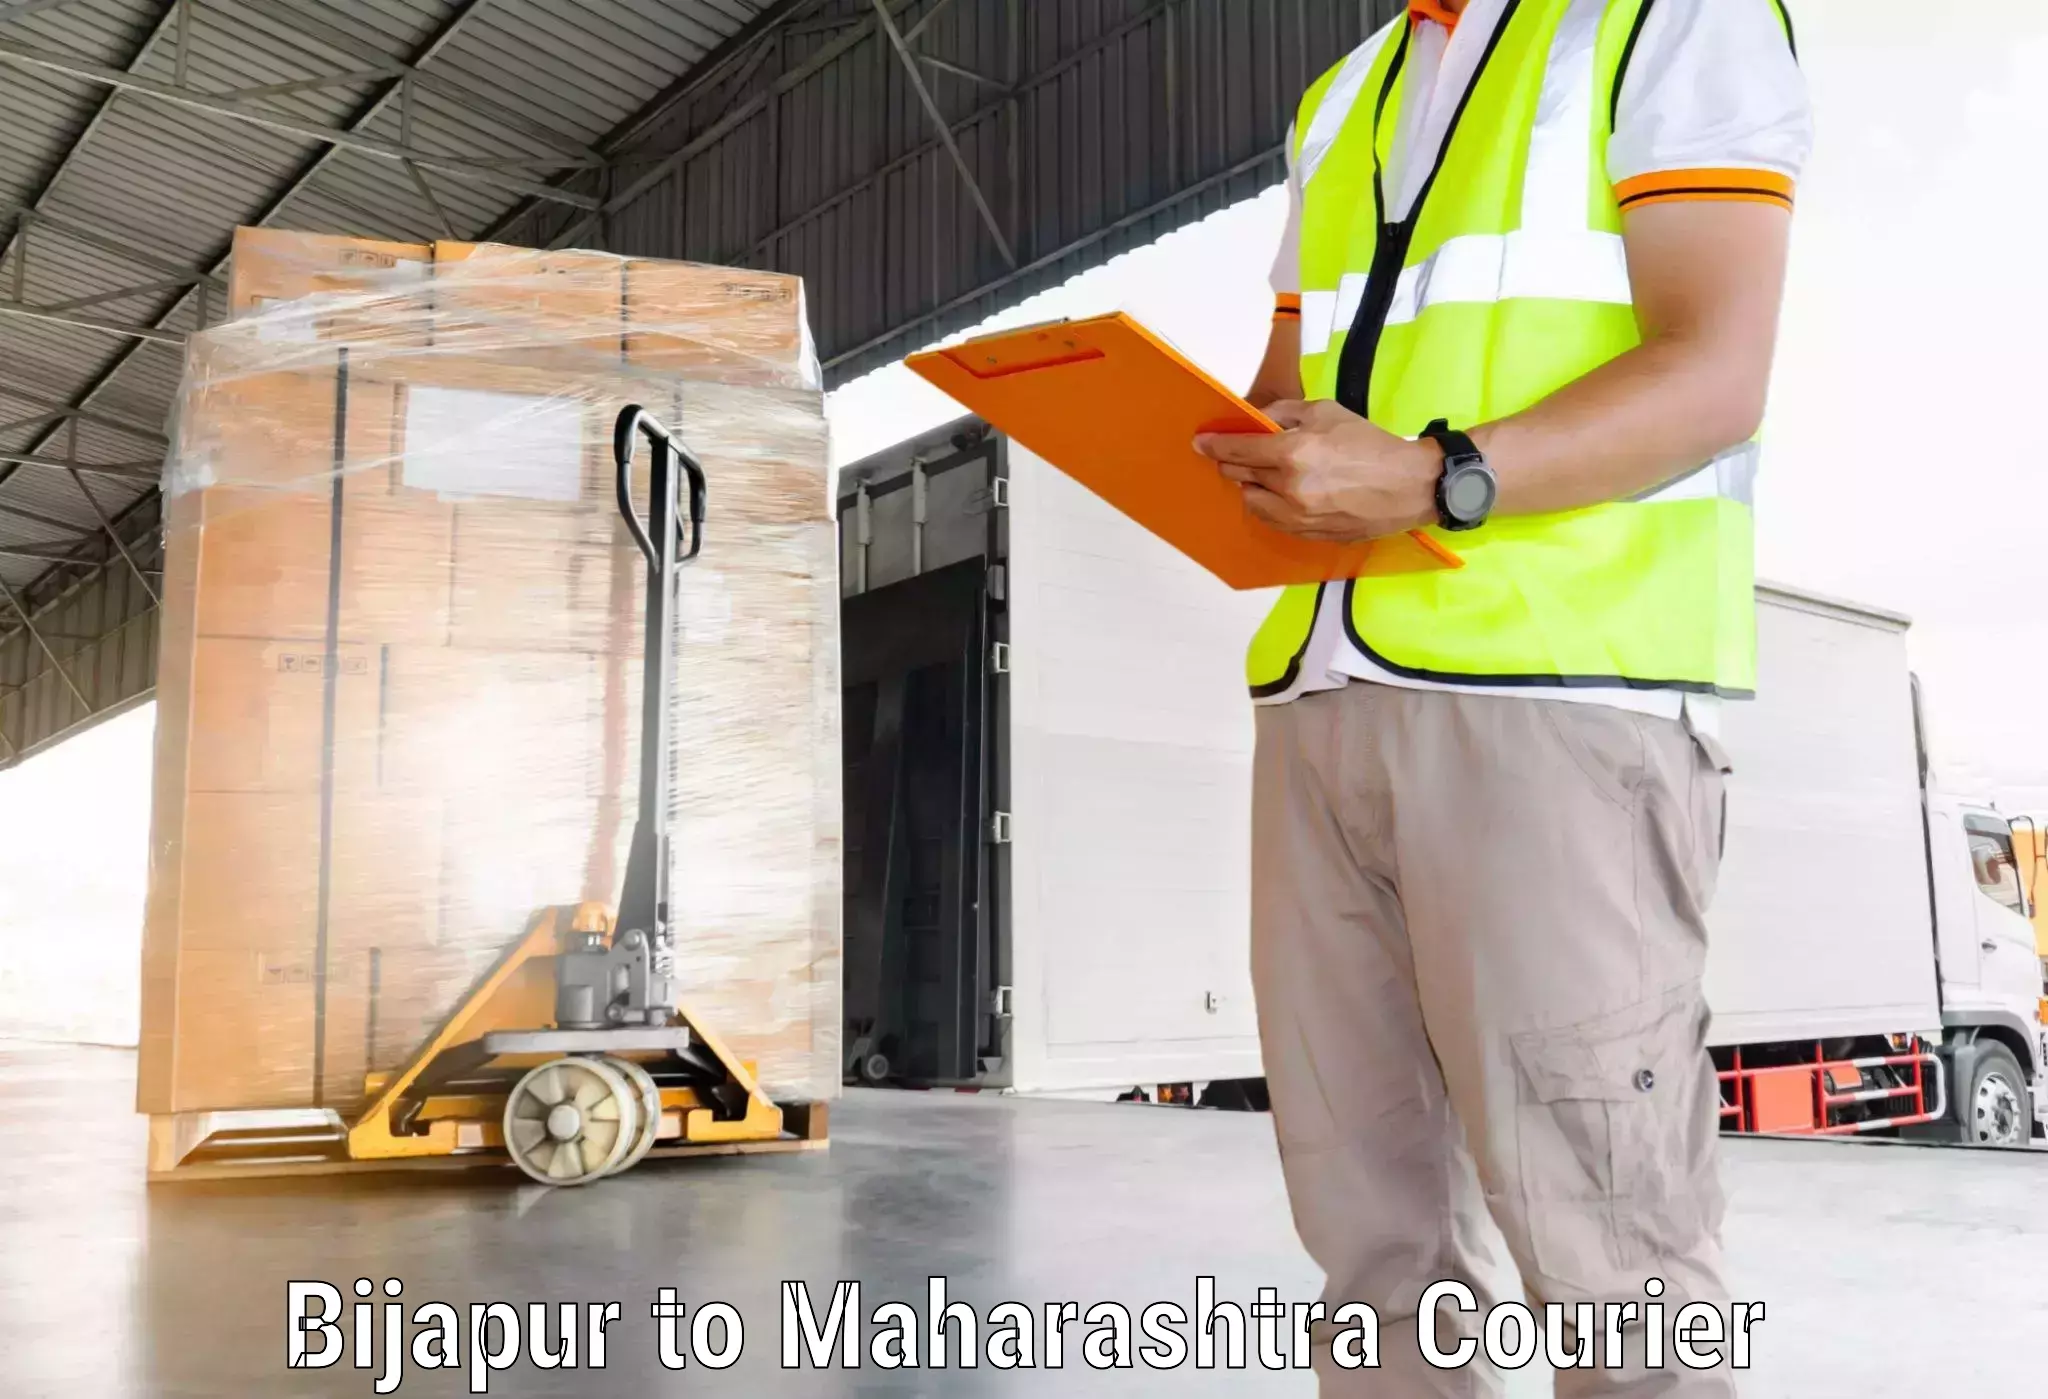 Enhanced tracking features Bijapur to Mahabaleshwar